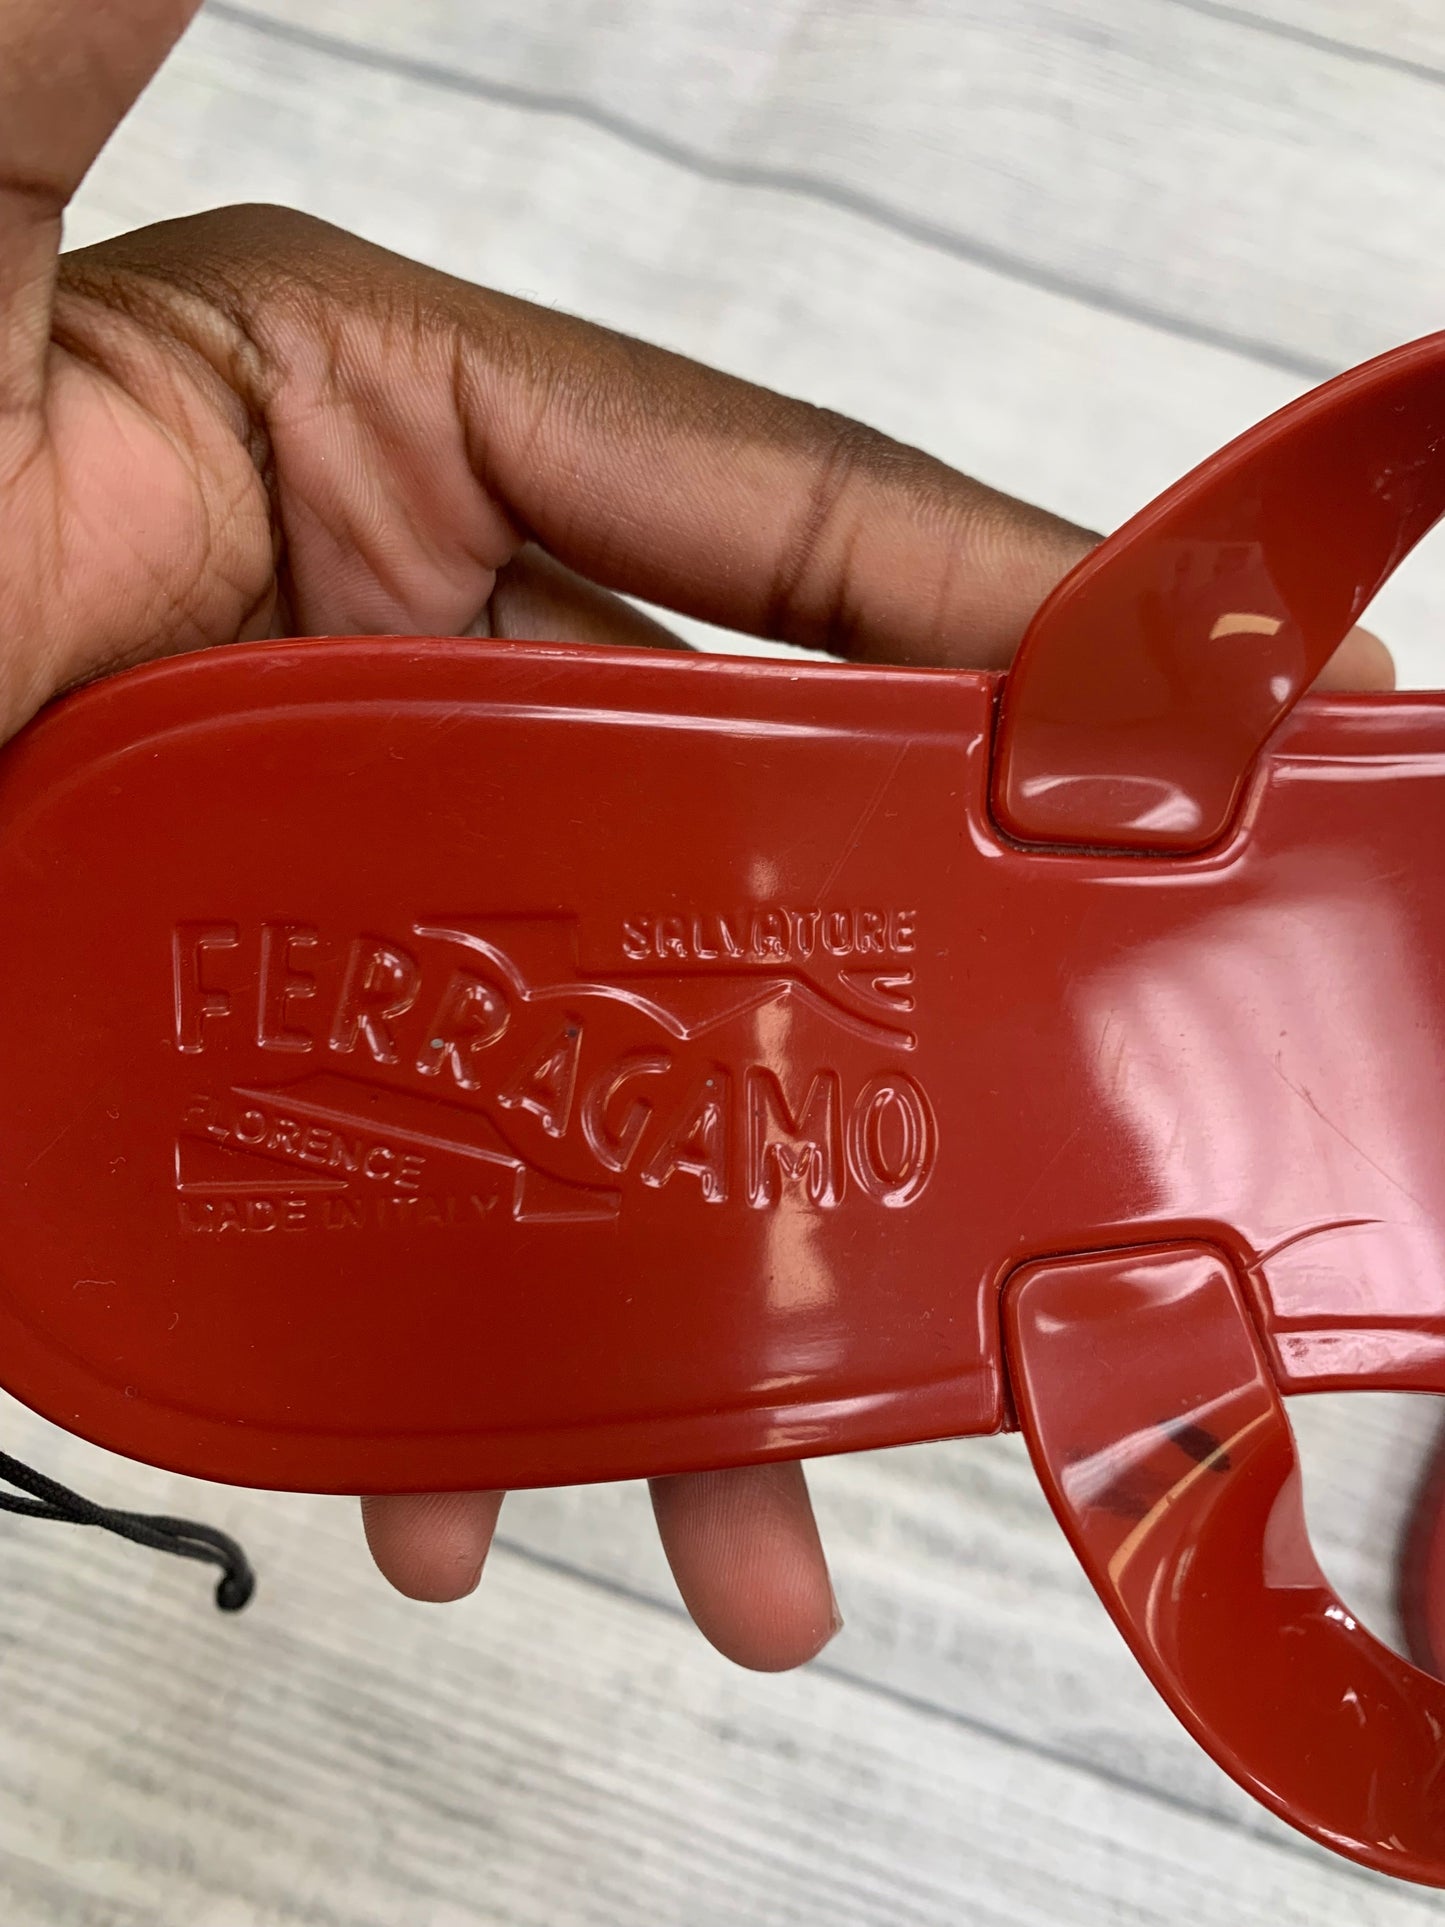 Red Sandals Flip Flops Ferragamo, Size 8